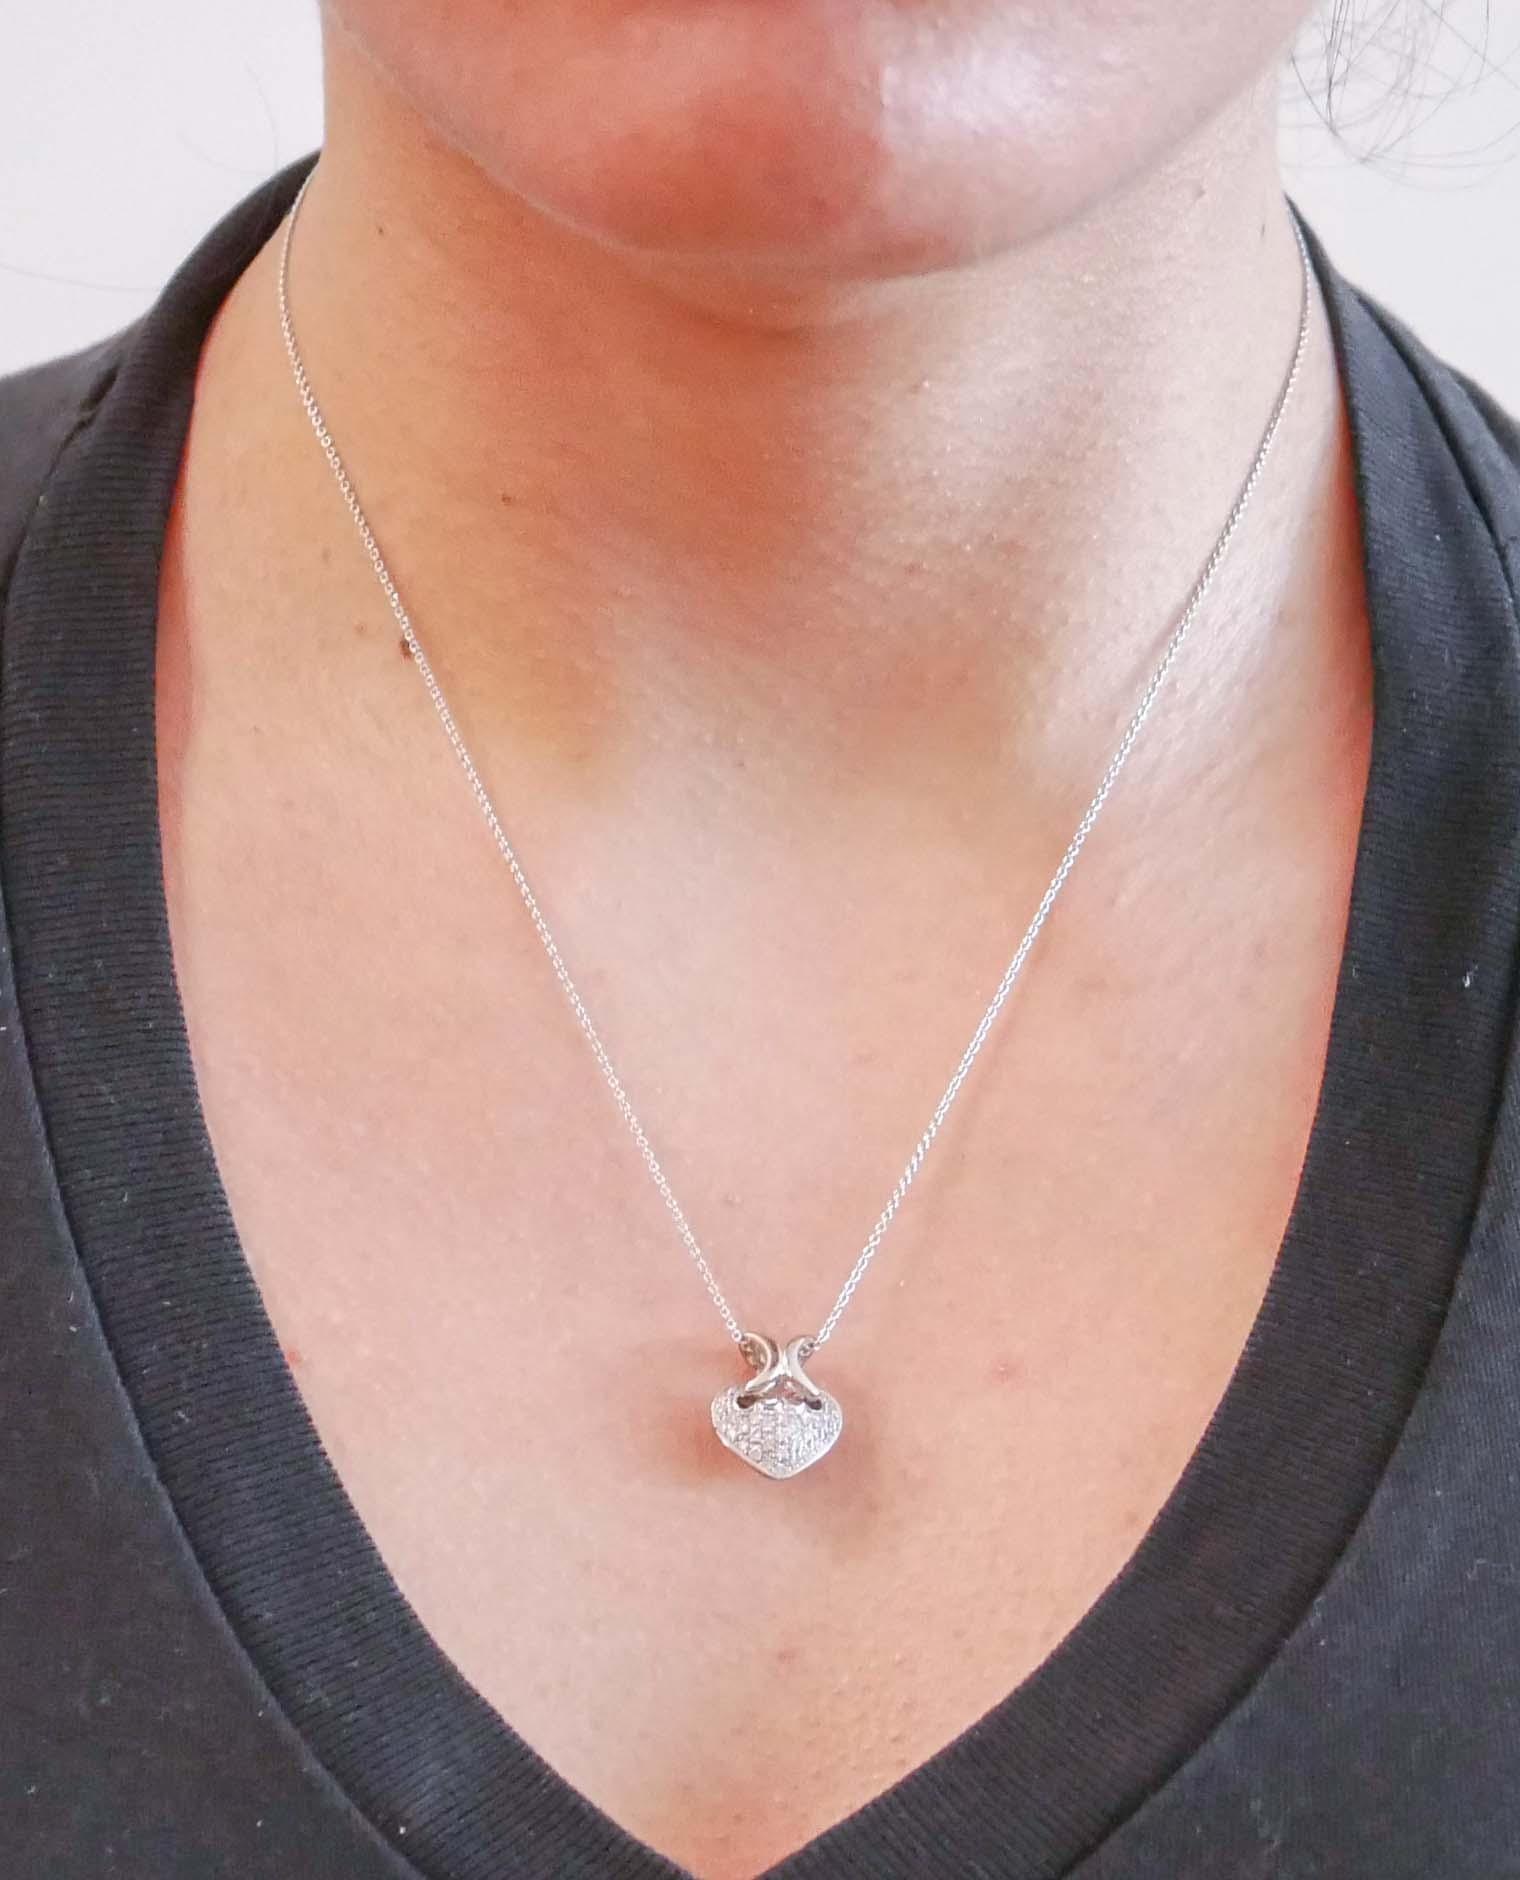 Women's Diamonds, 18 Karat White Gold Heart Pendant Necklace.